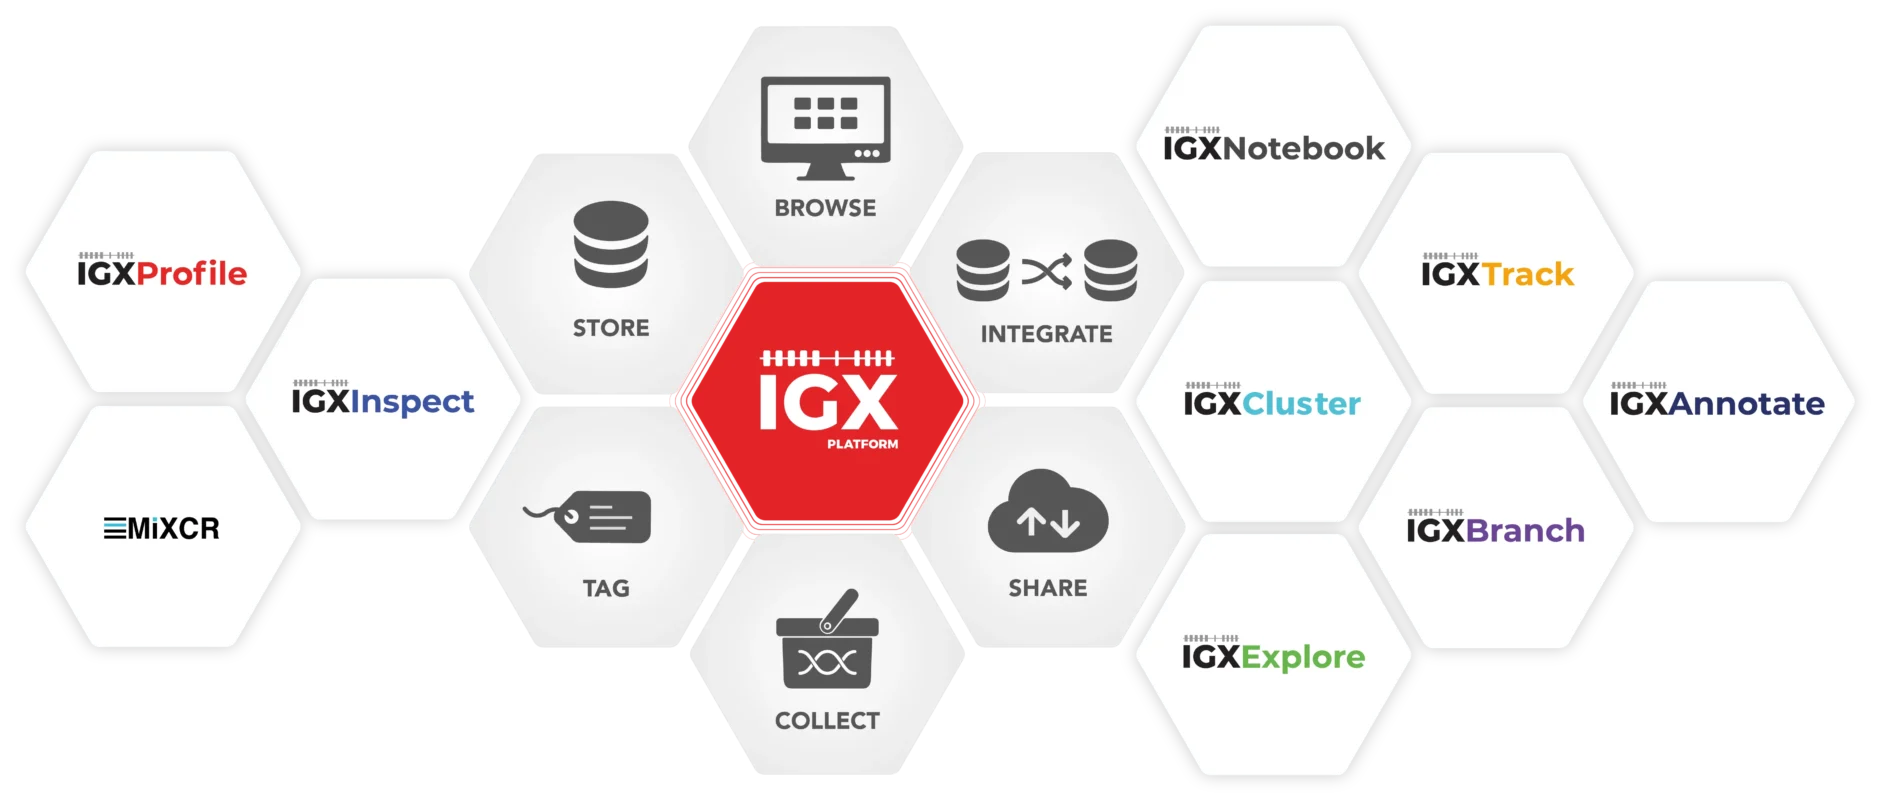 IGX Platform functionality at a glance.